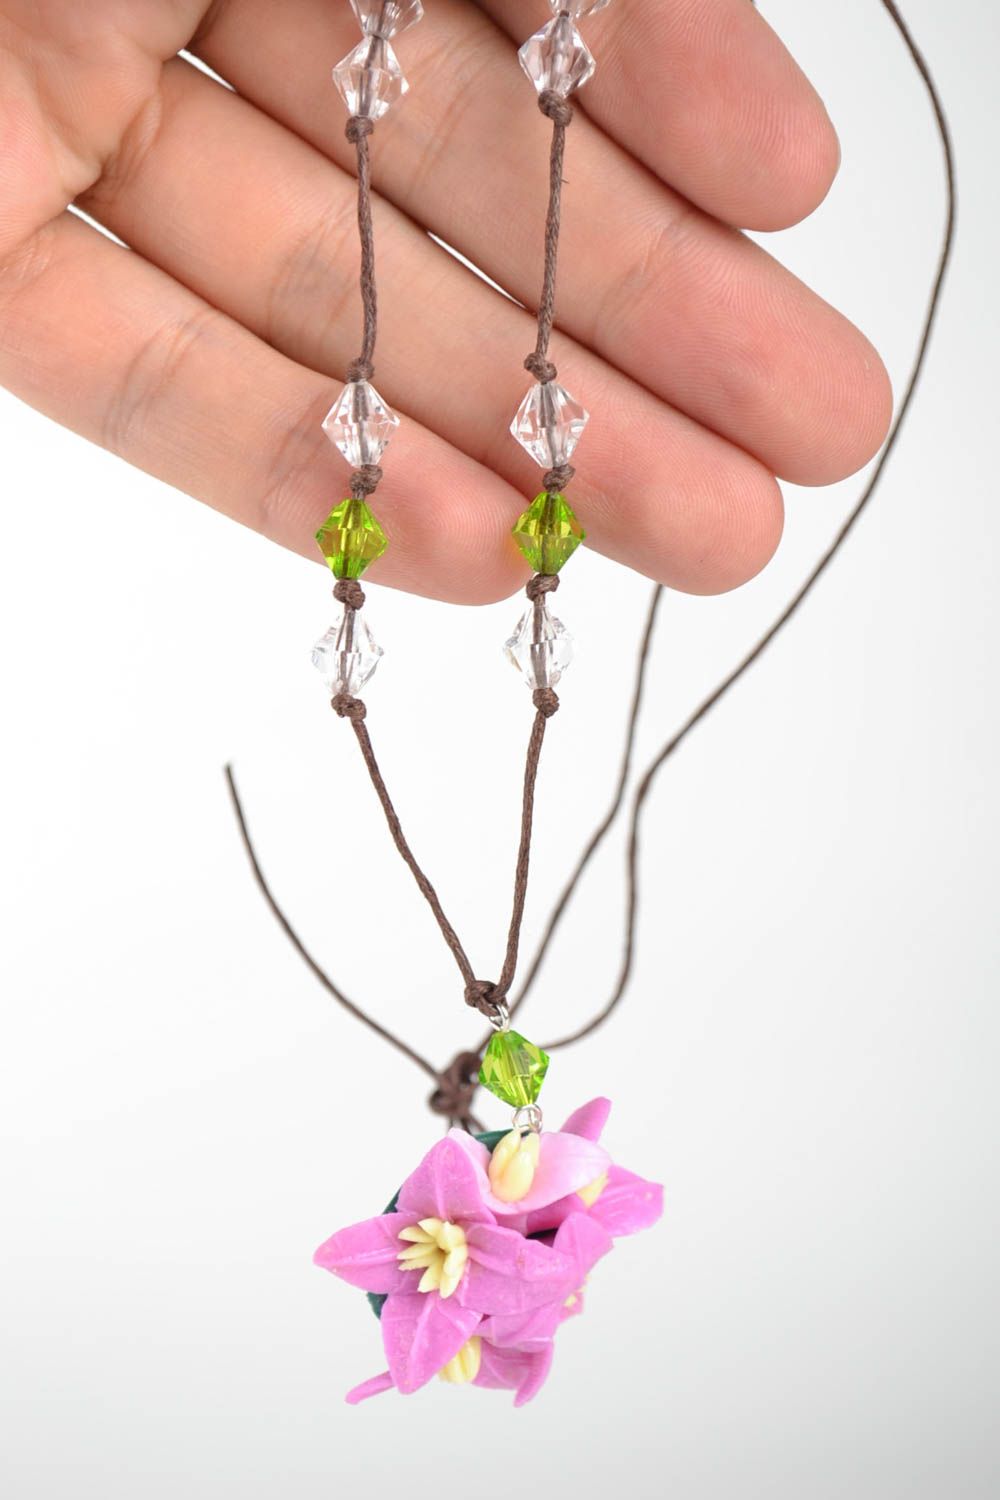 Flower necklace handmade jewelry fashion jewelry polymer clay pendant necklace photo 5